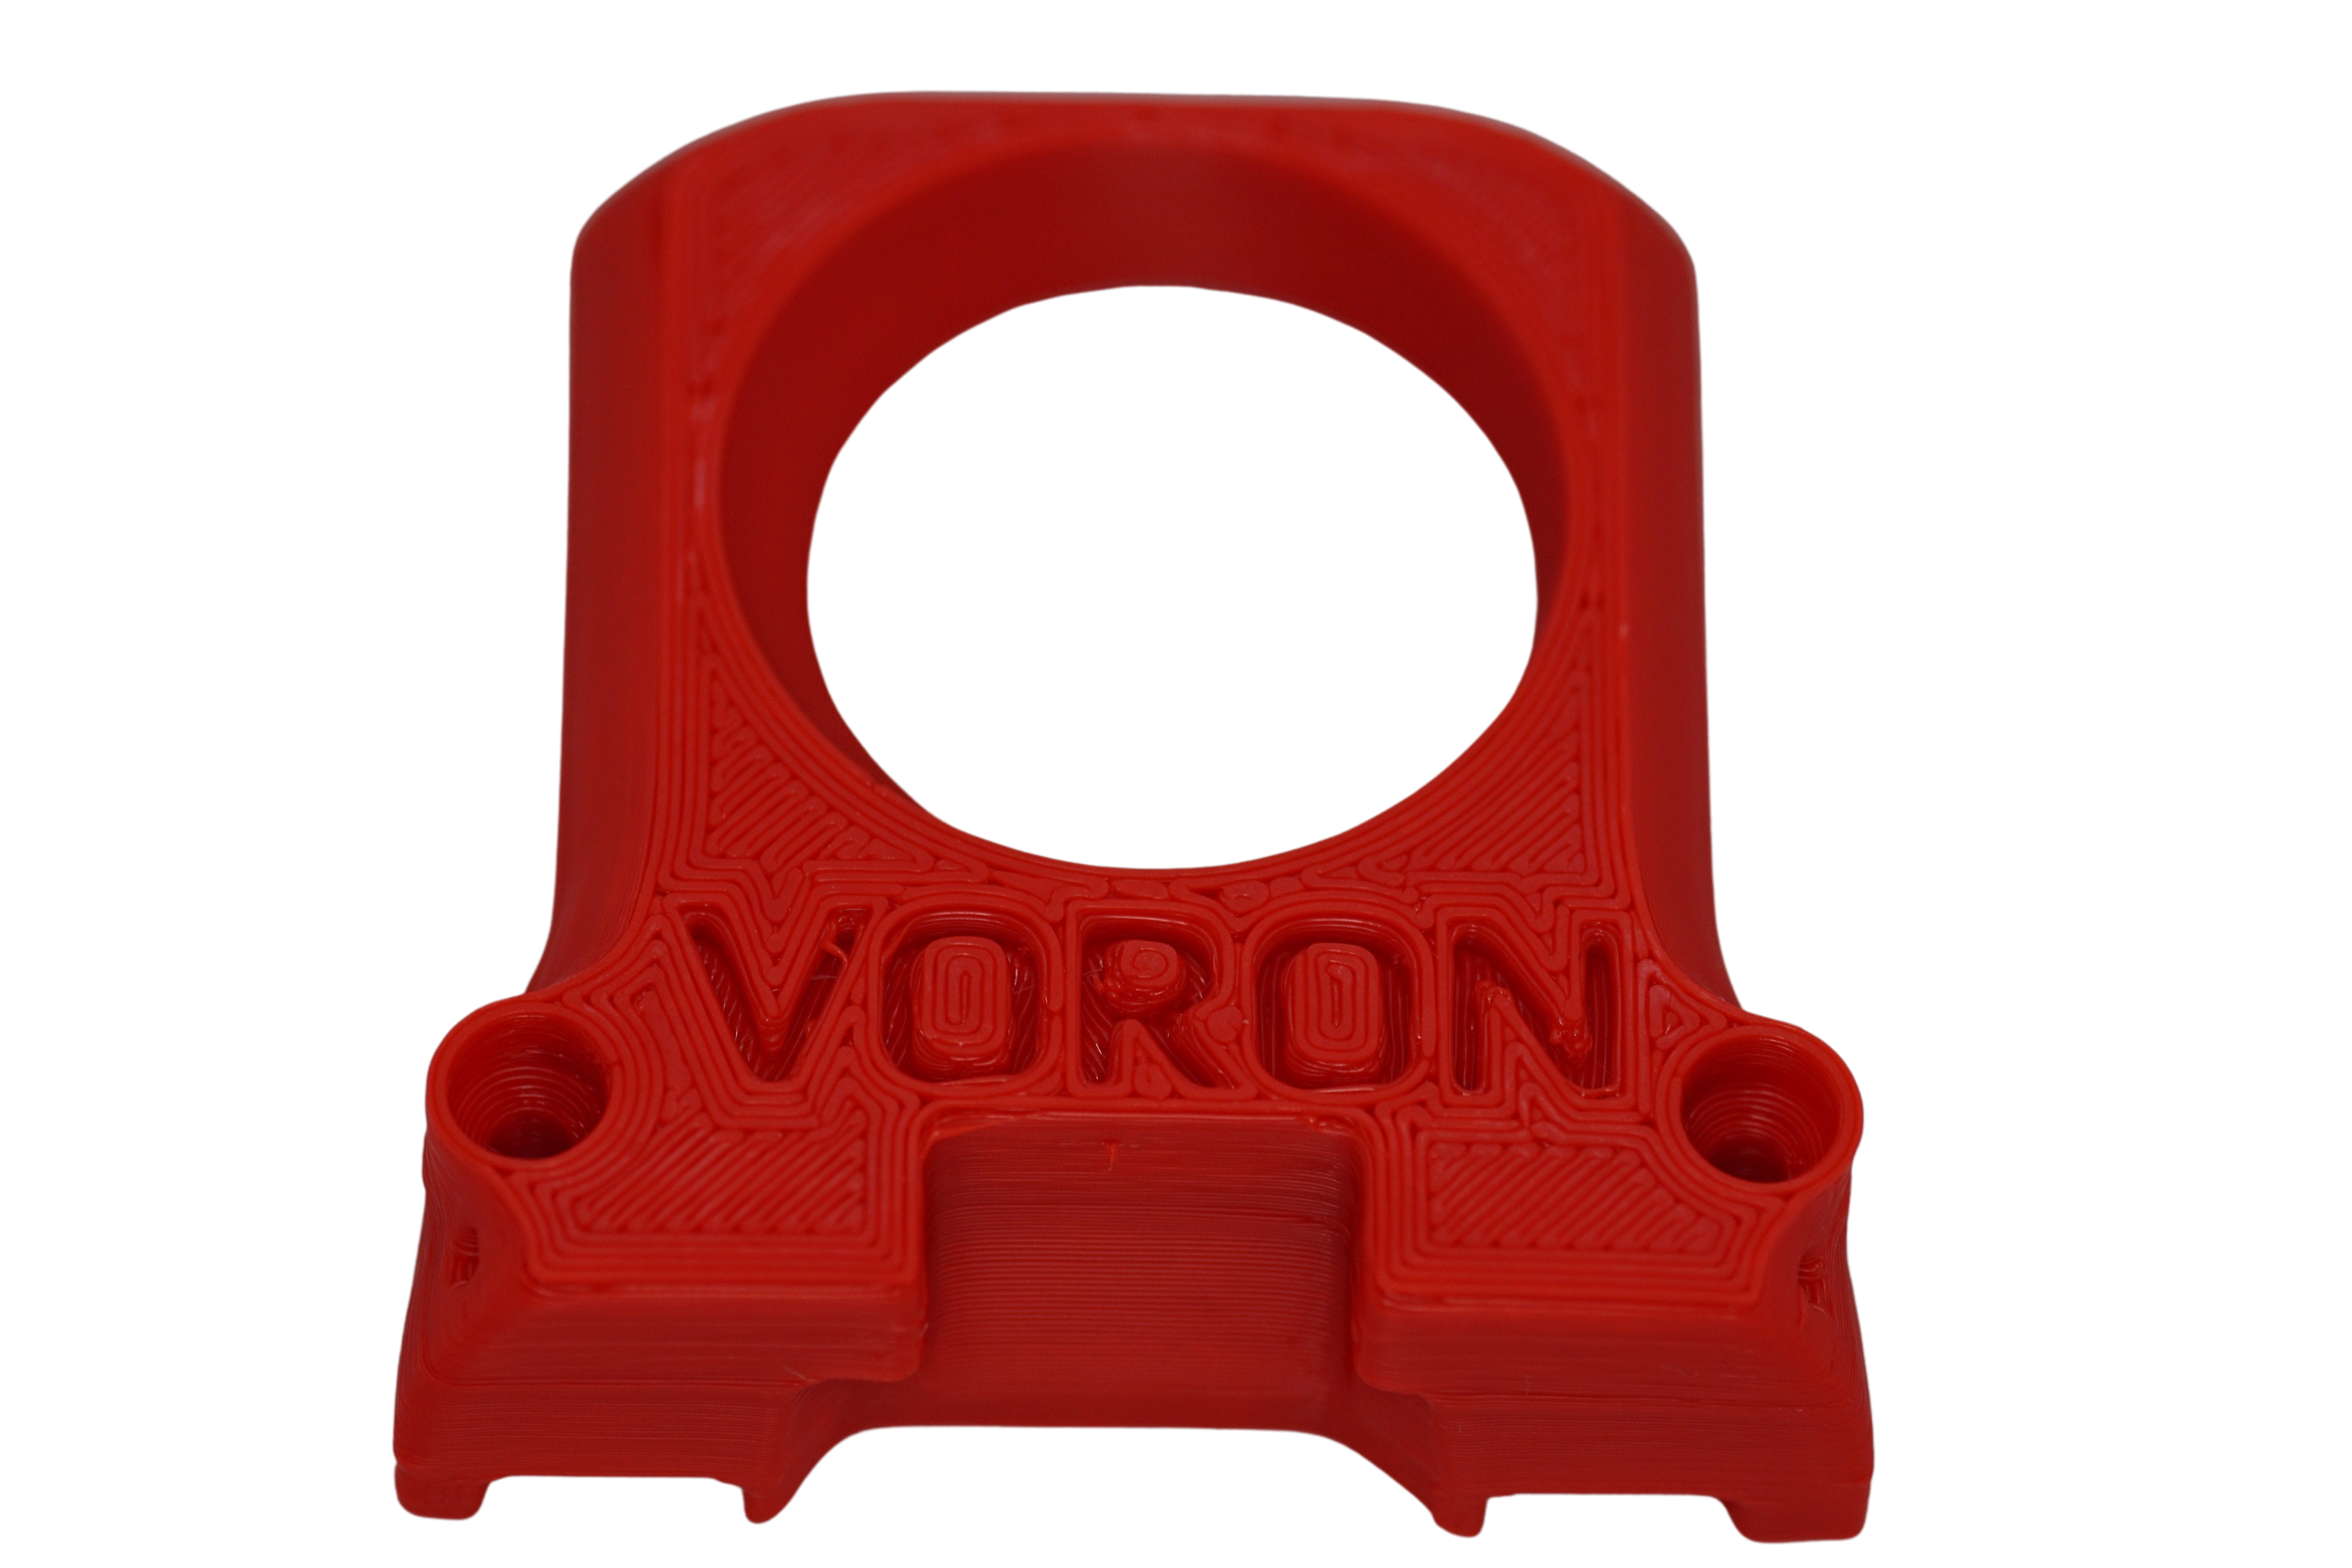 Voron V0.1 Printed Parts Kit - Complete or Functional